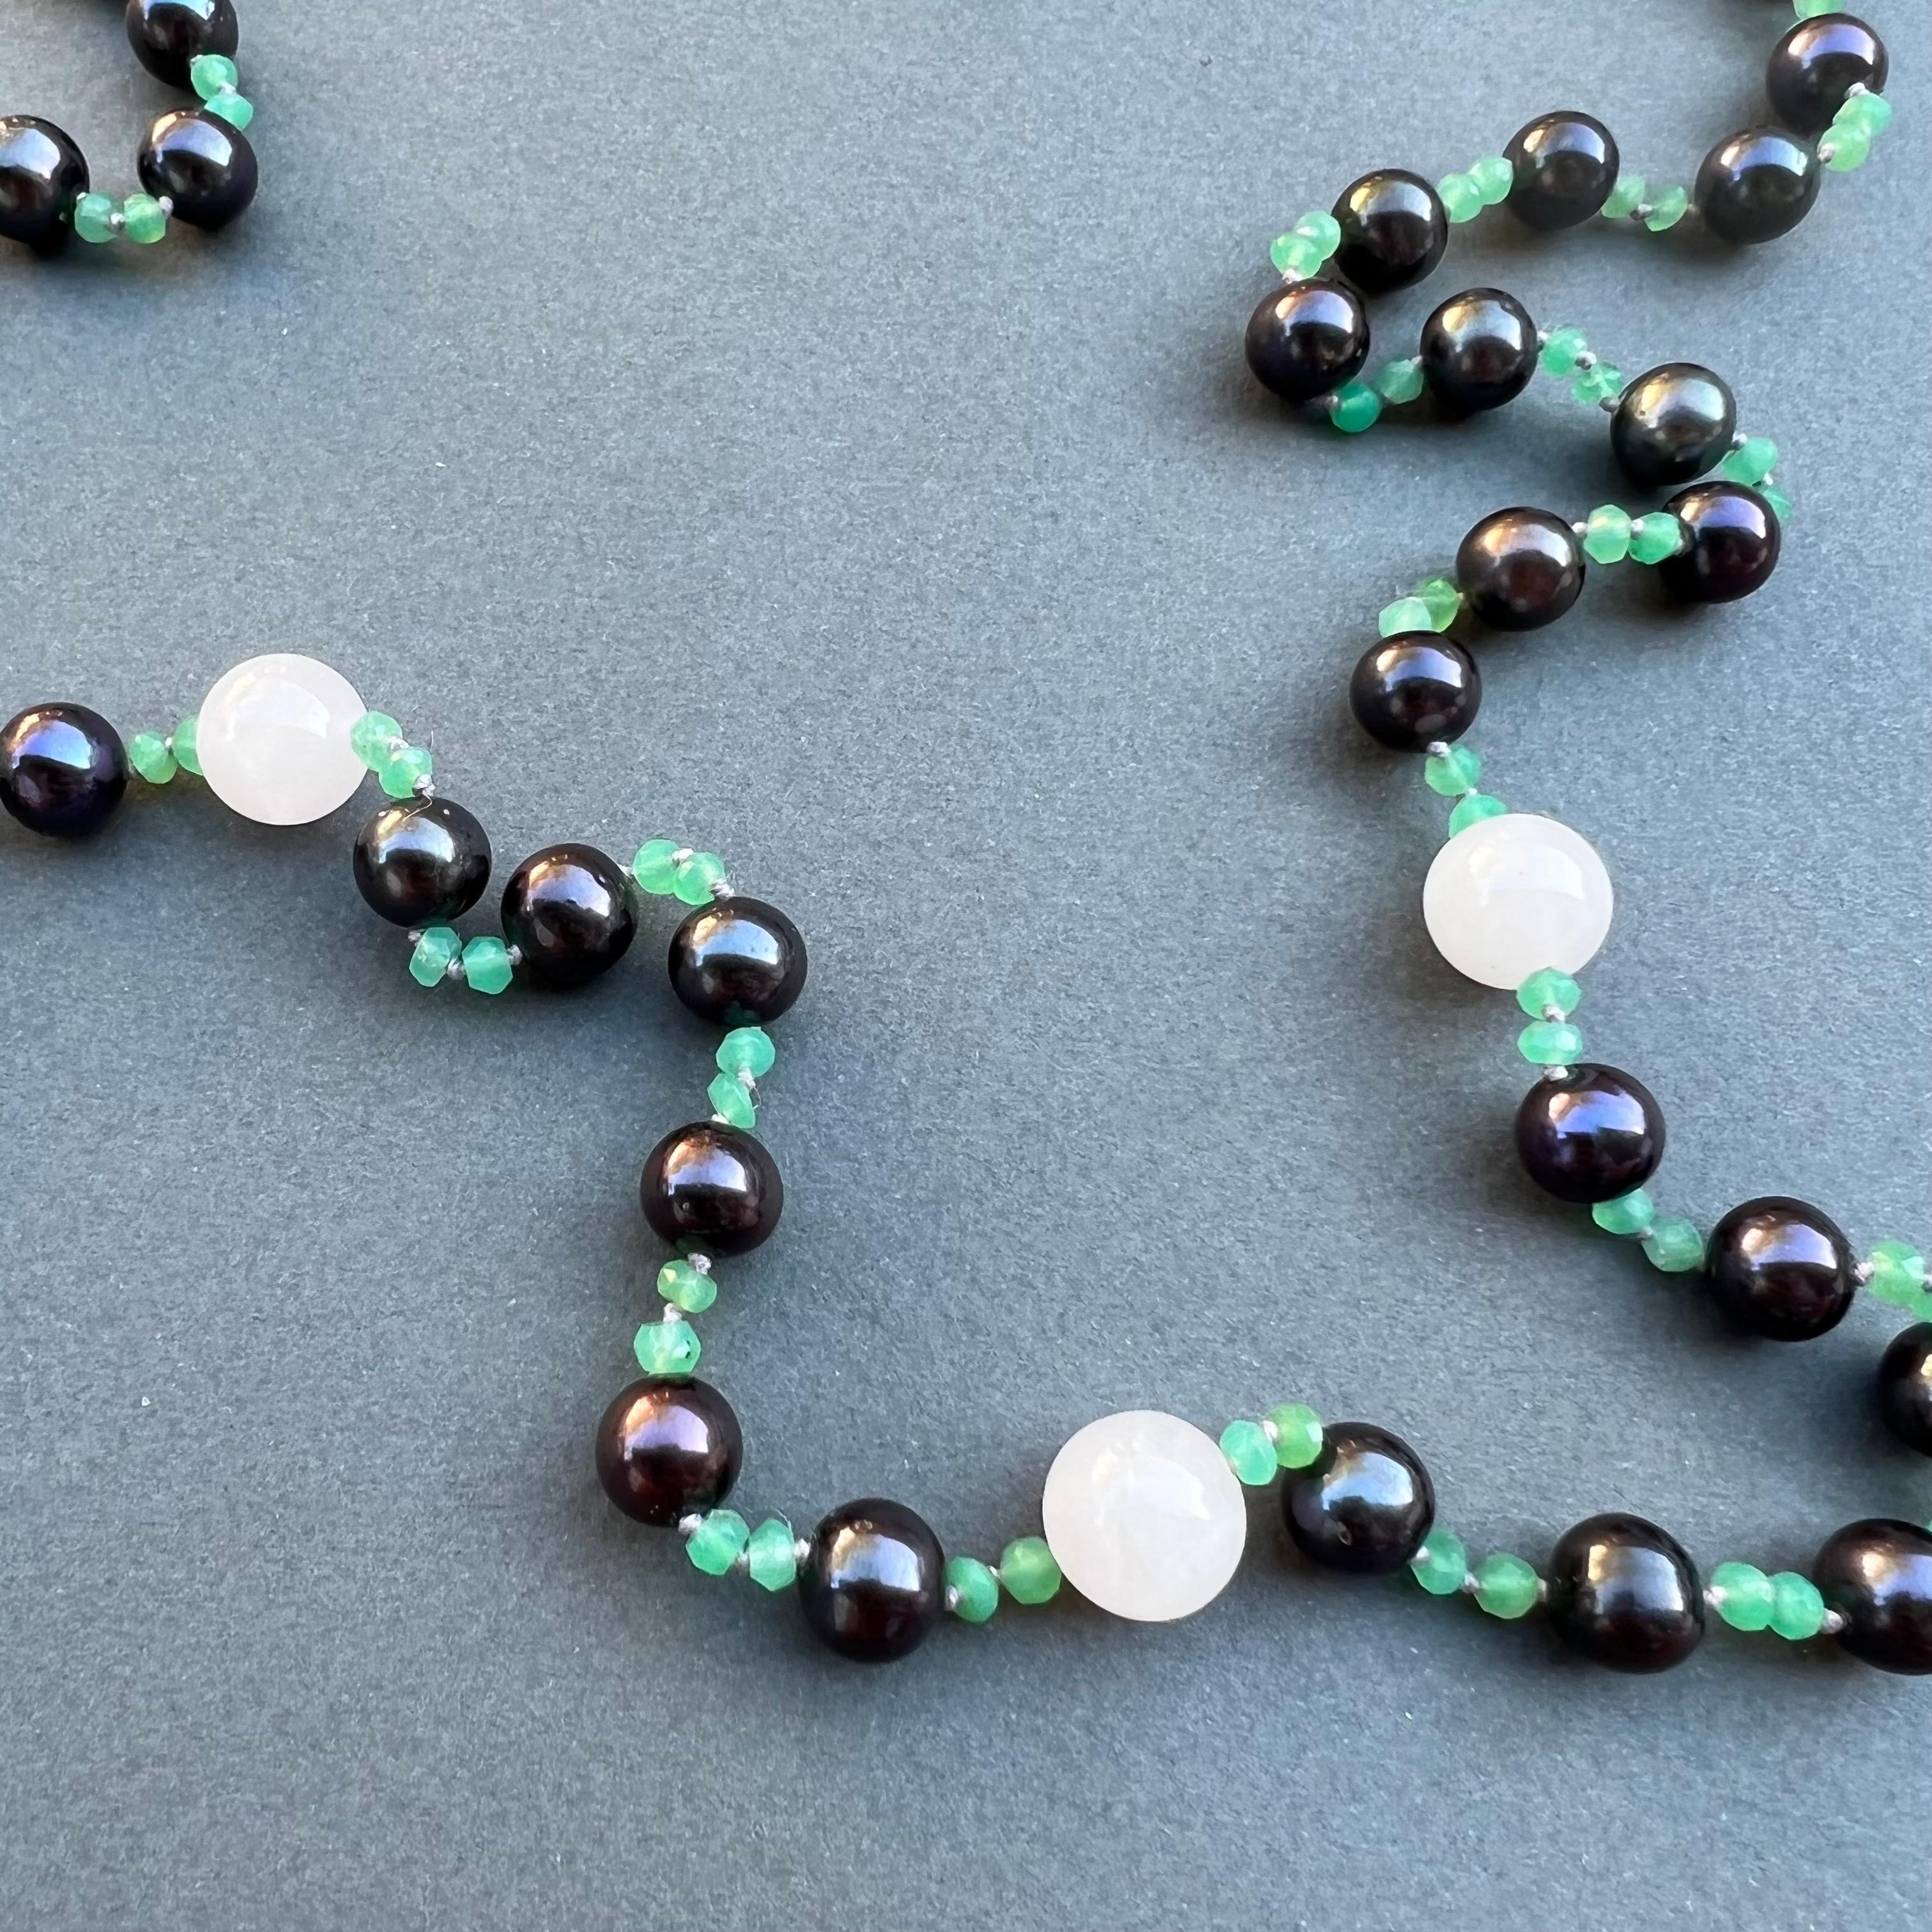 Black Pearl Chrysoprase Quartz Bead Necklace J Dauphin For Sale 1